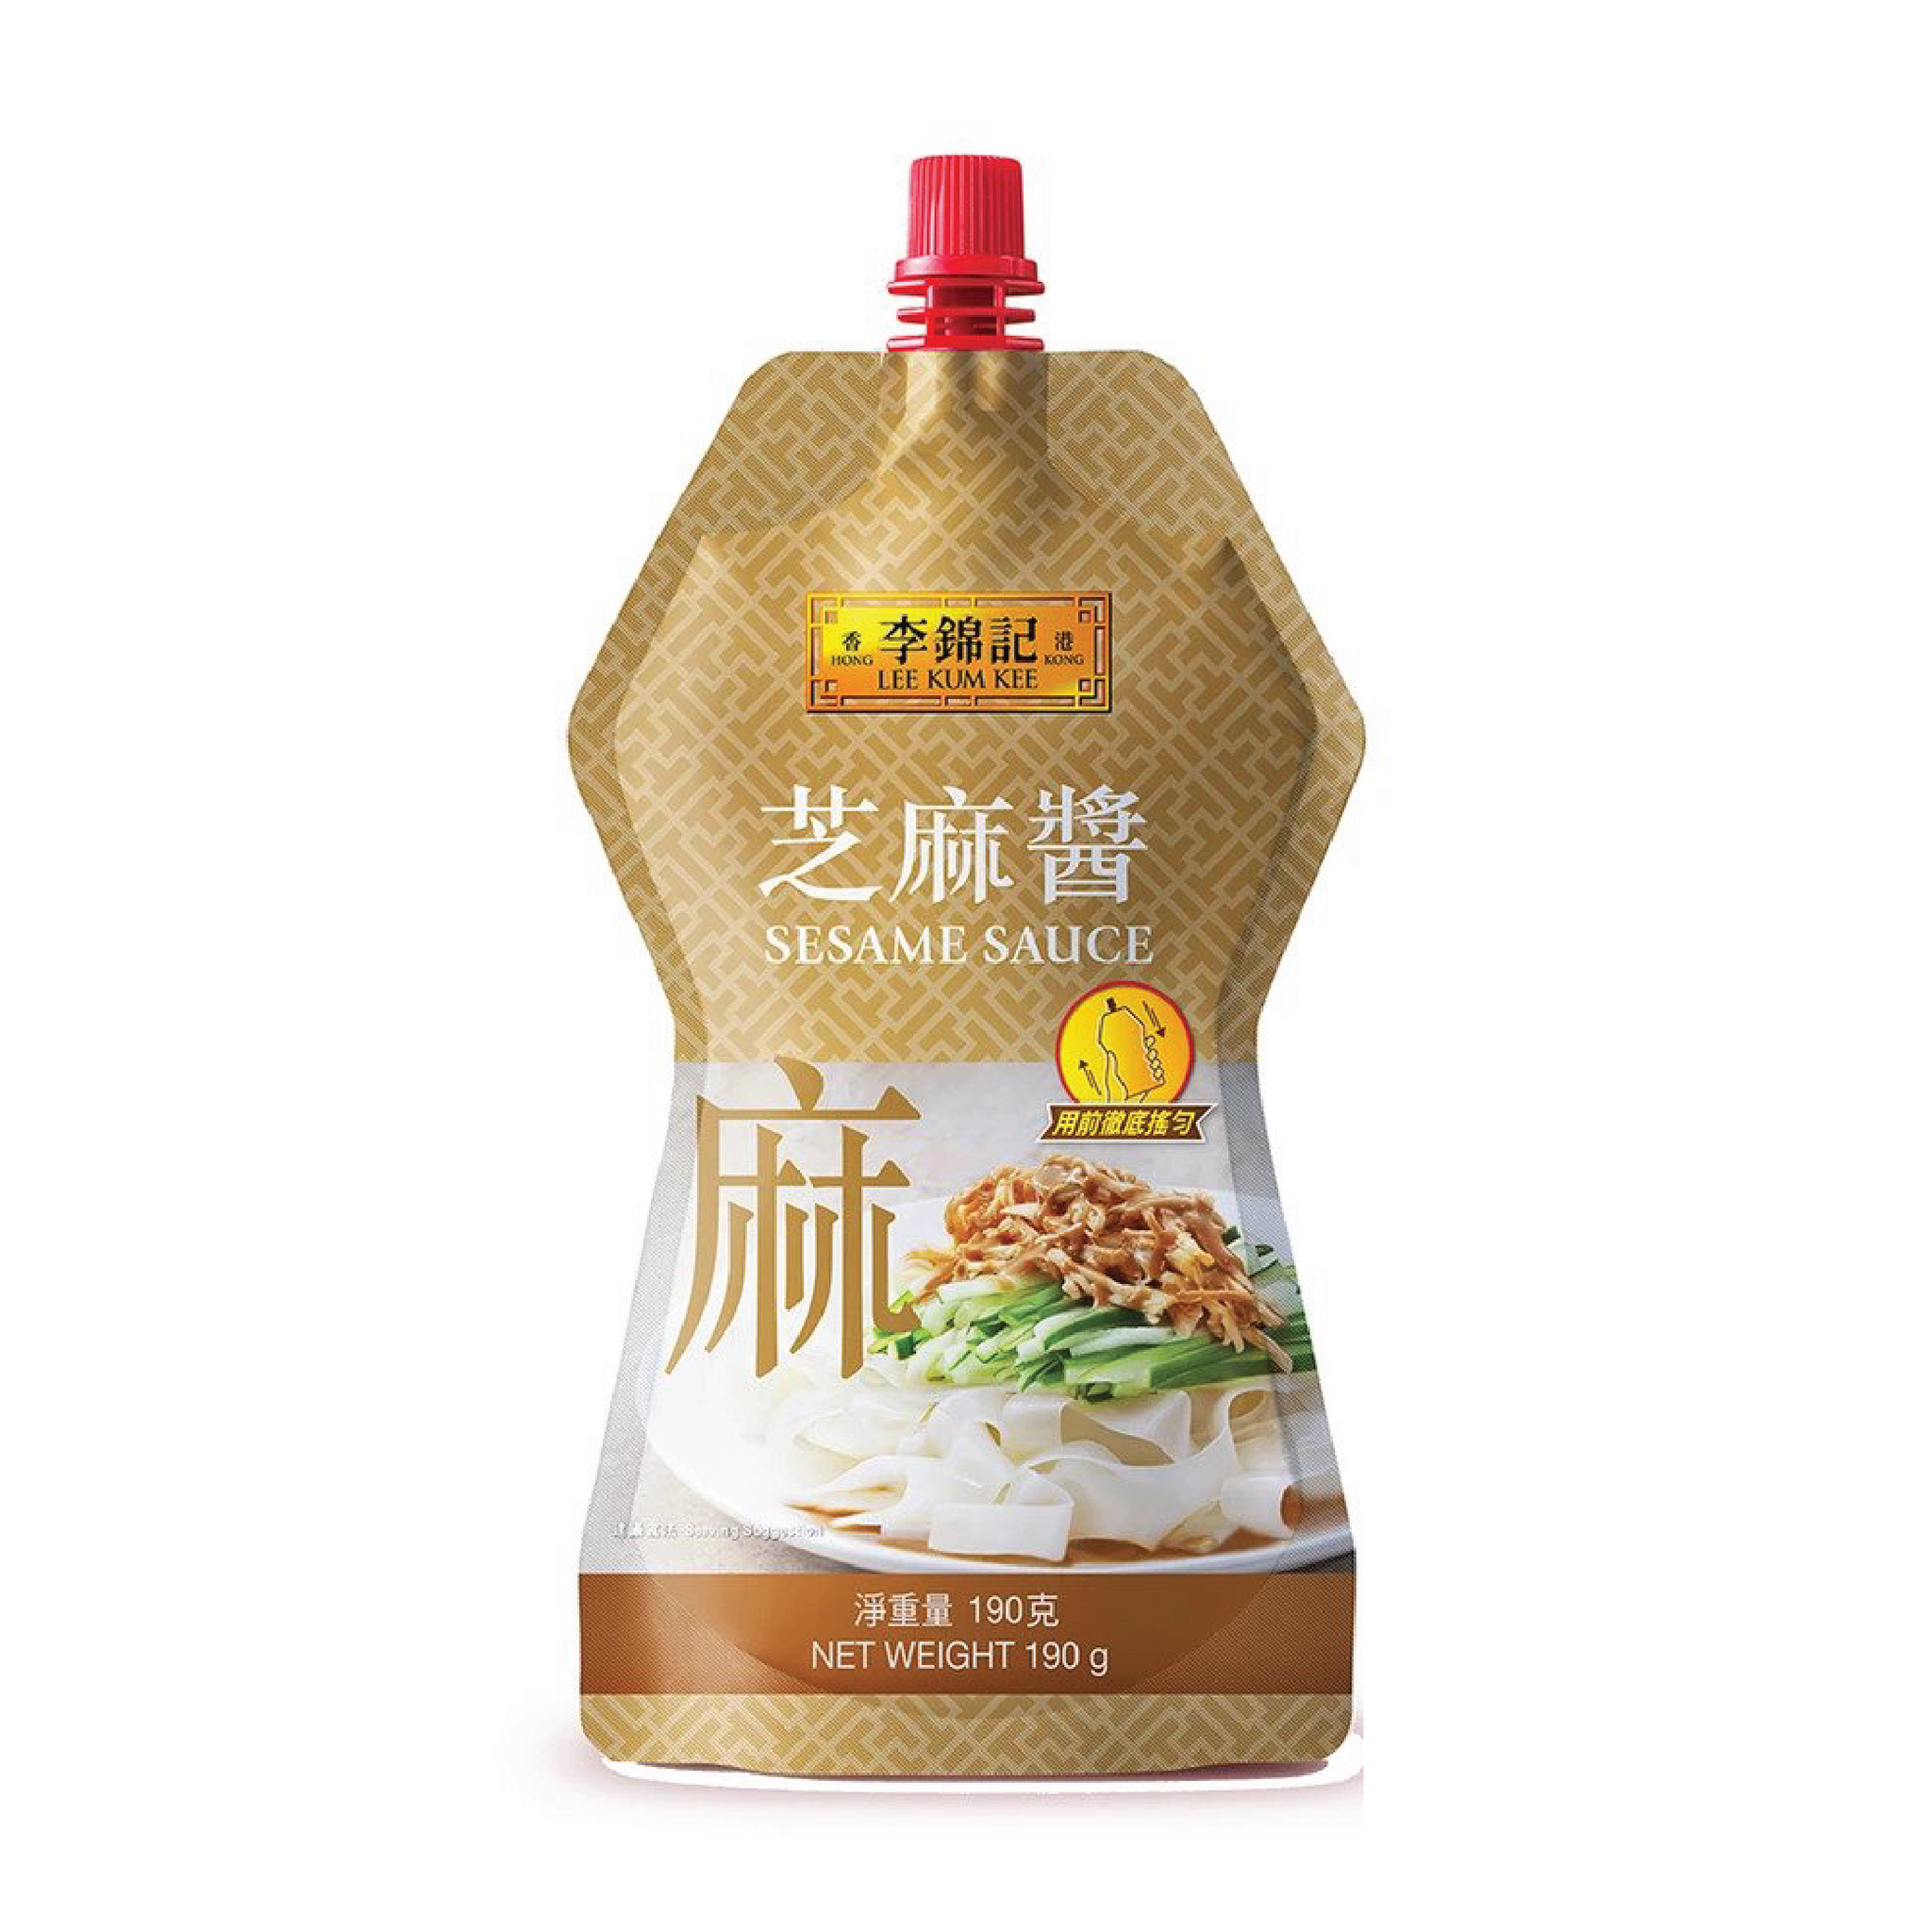 LEE KUM KEE Sesame Sauce Cheer Pack 190g李錦記 芝麻醬直立唧唧裝 190克